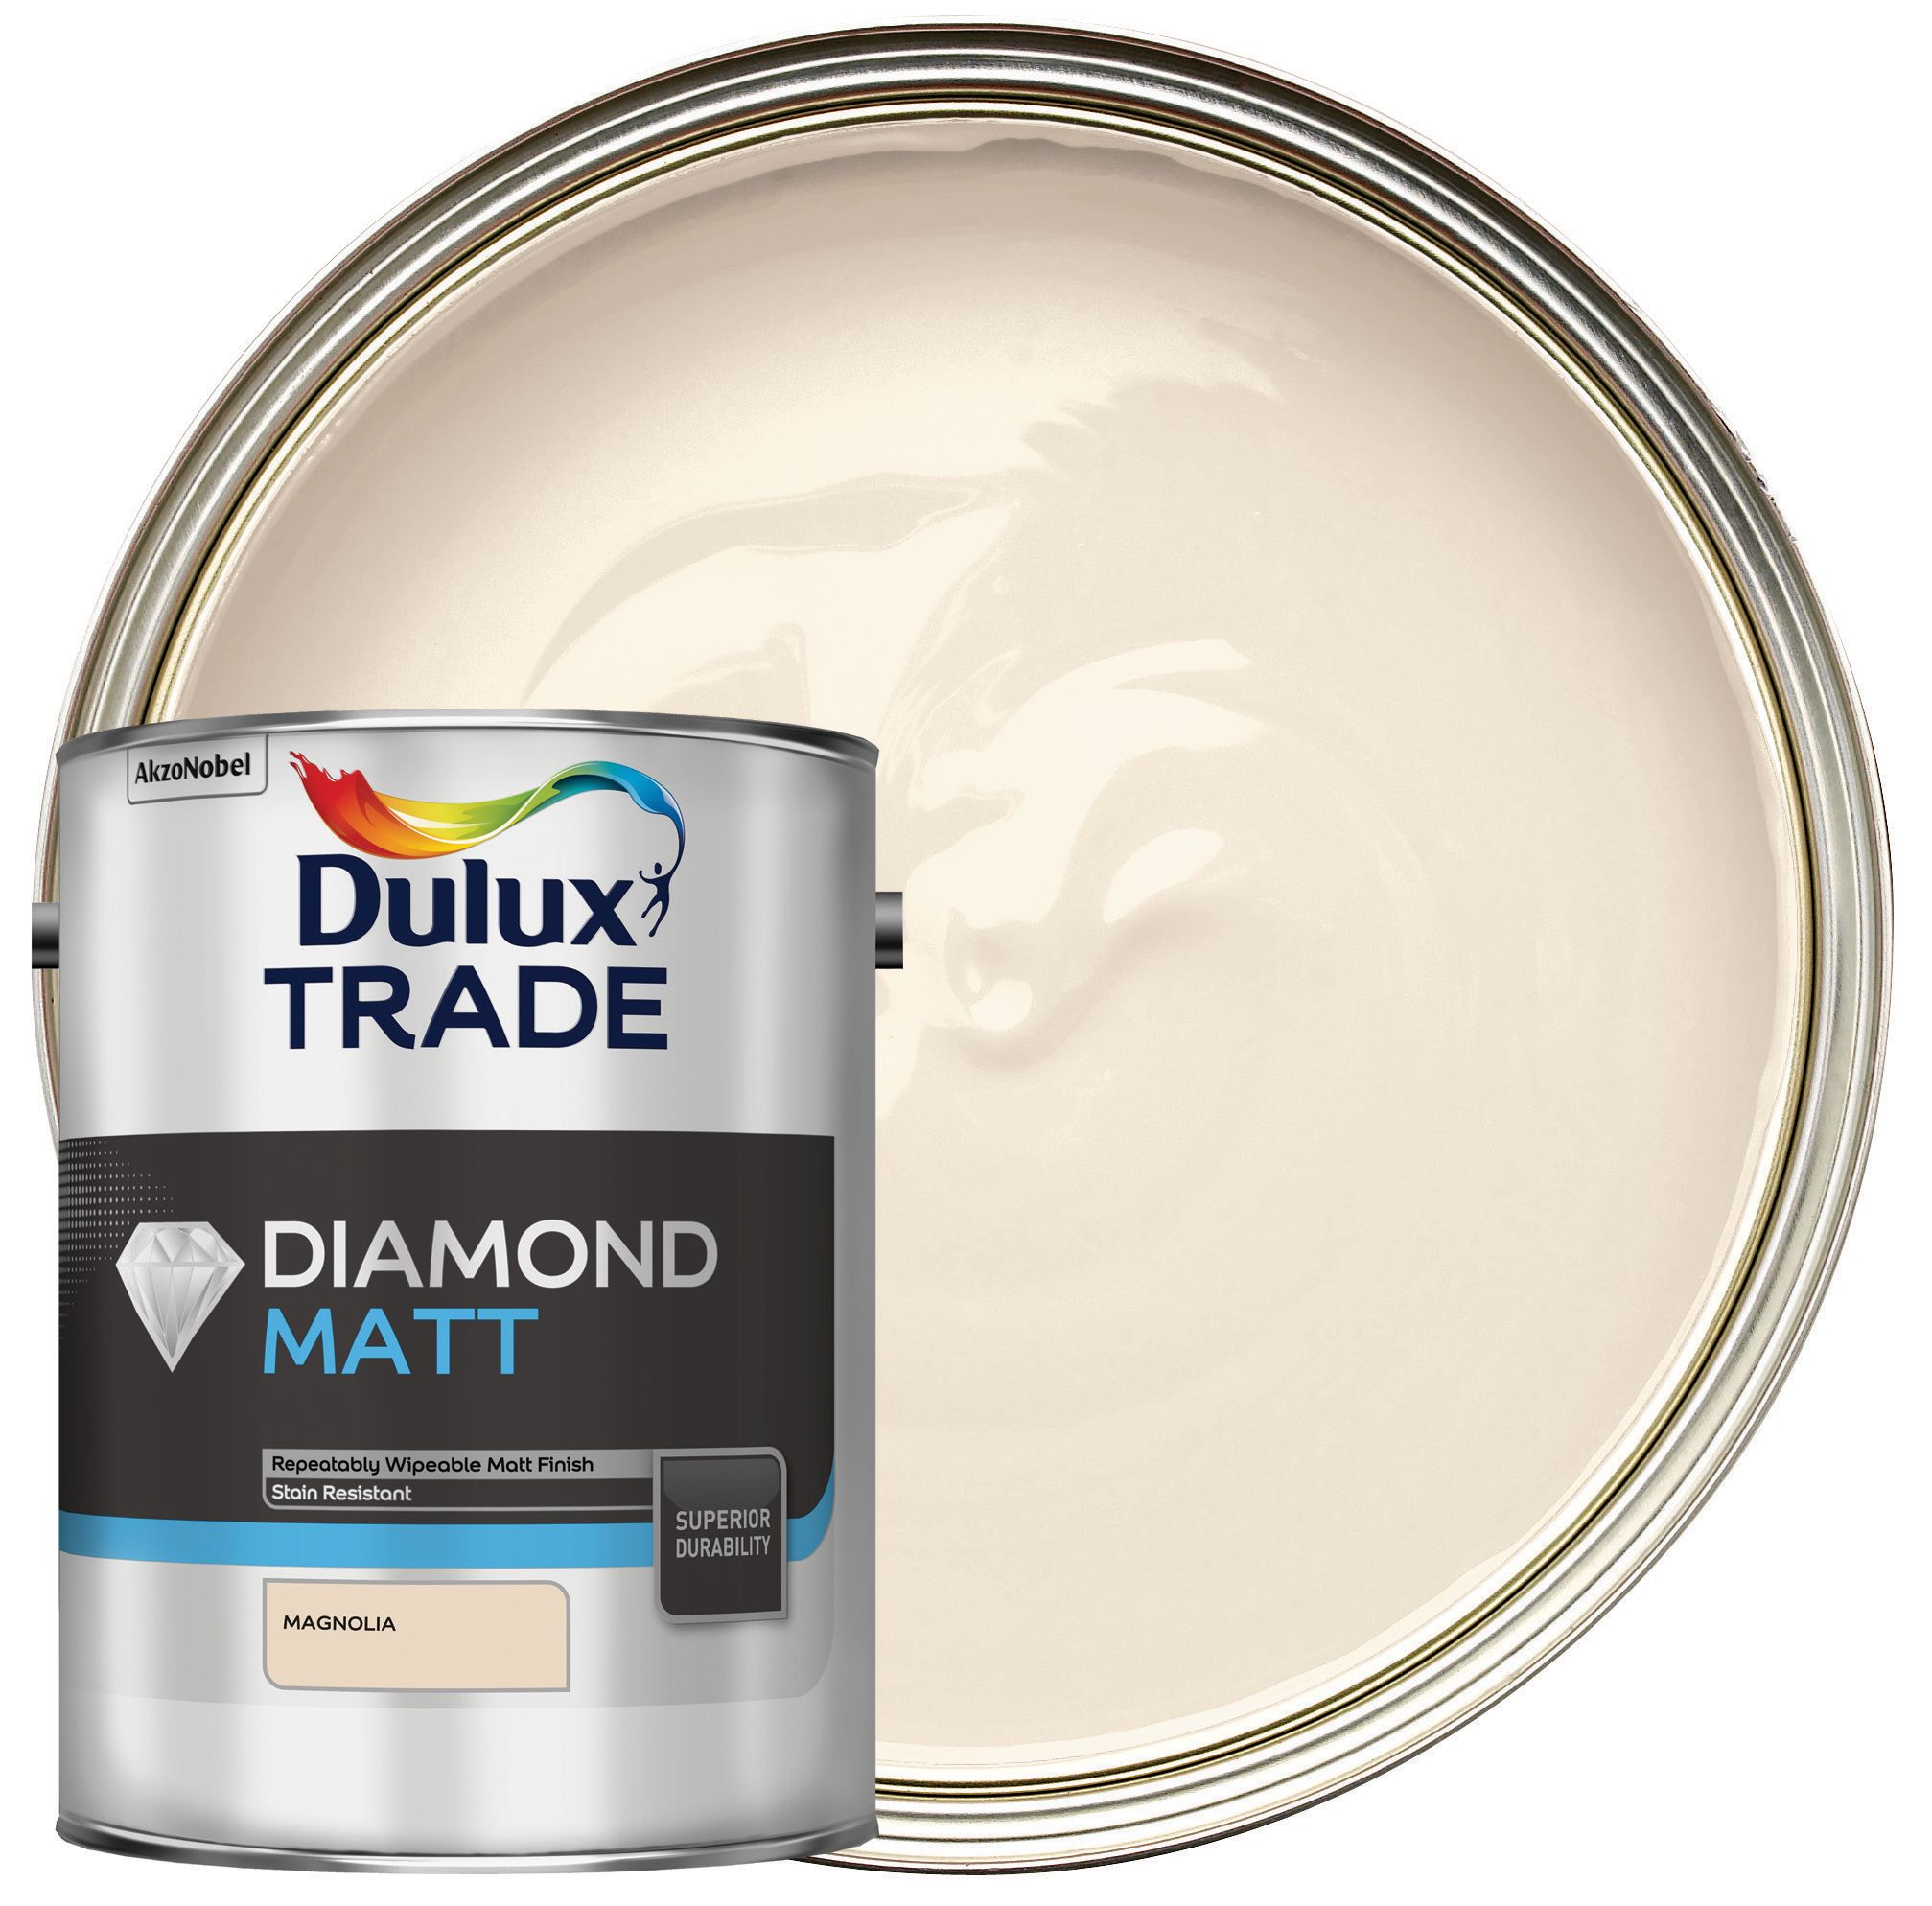 Image of Dulux Trade Diamond Matt Emulsion Paint - Magnolia - 5L